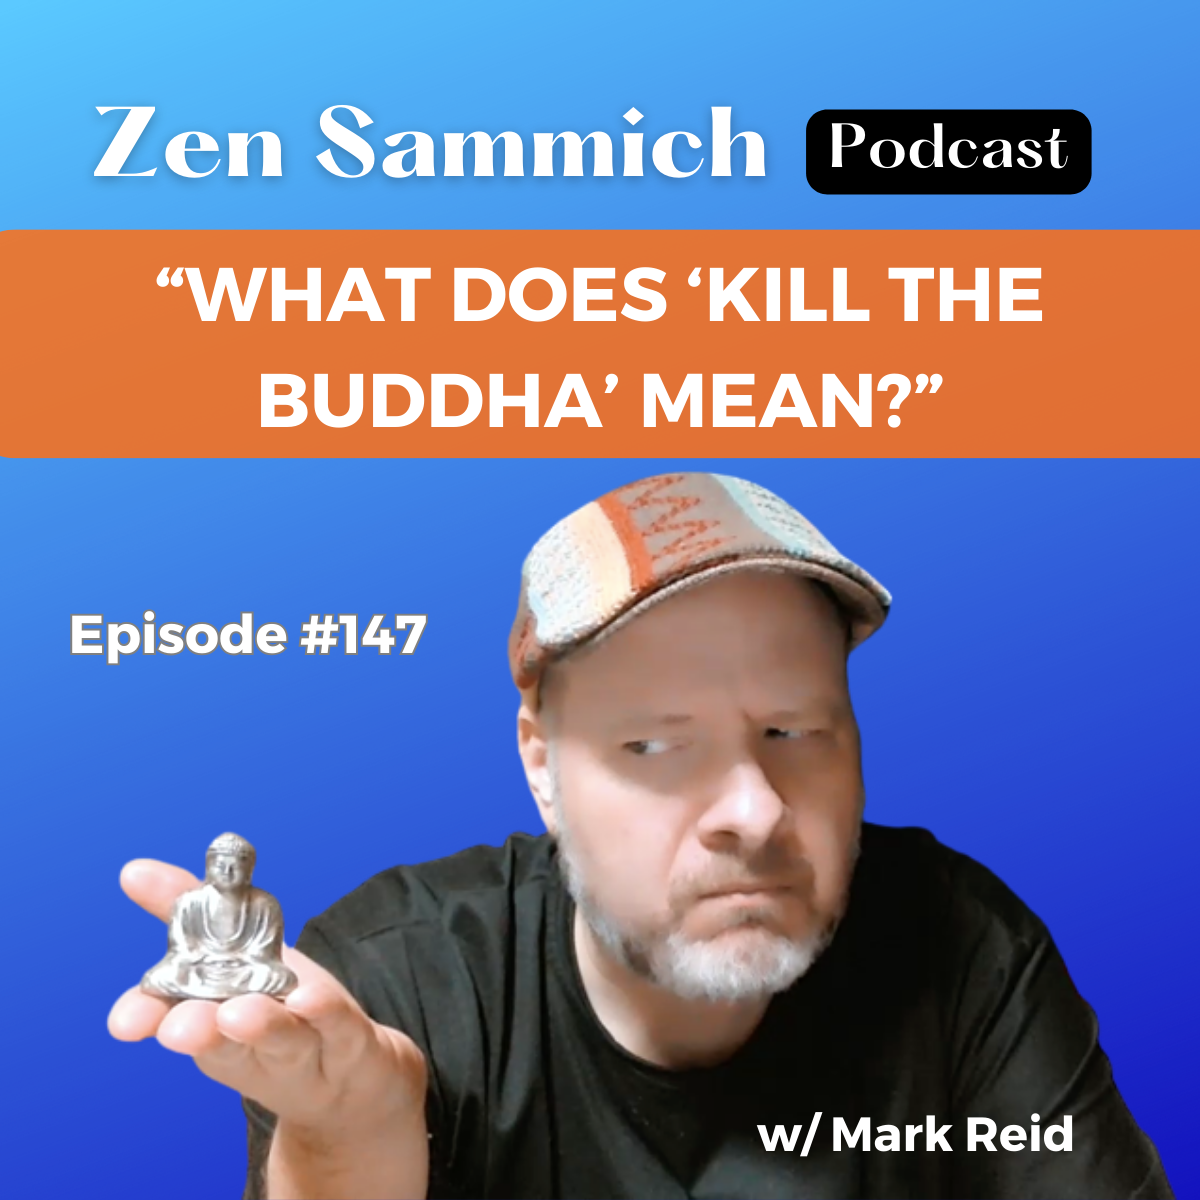 Kill the Buddha Zen Sammich